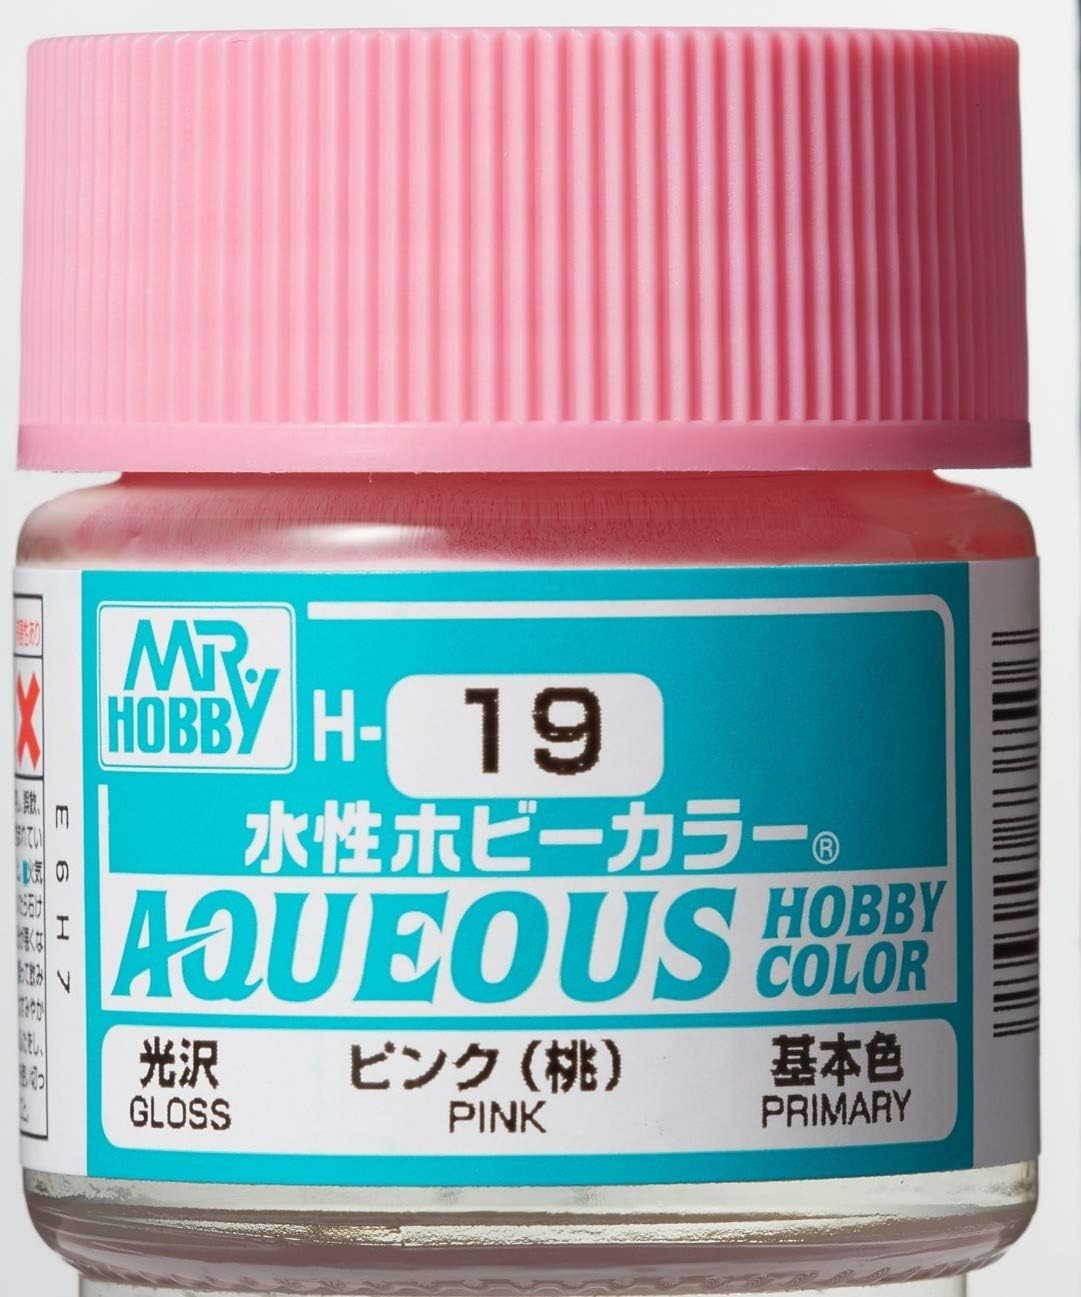 Mr. Hobby Aqueous Hobby Color H19 Gloss Pink 10ml Bottle